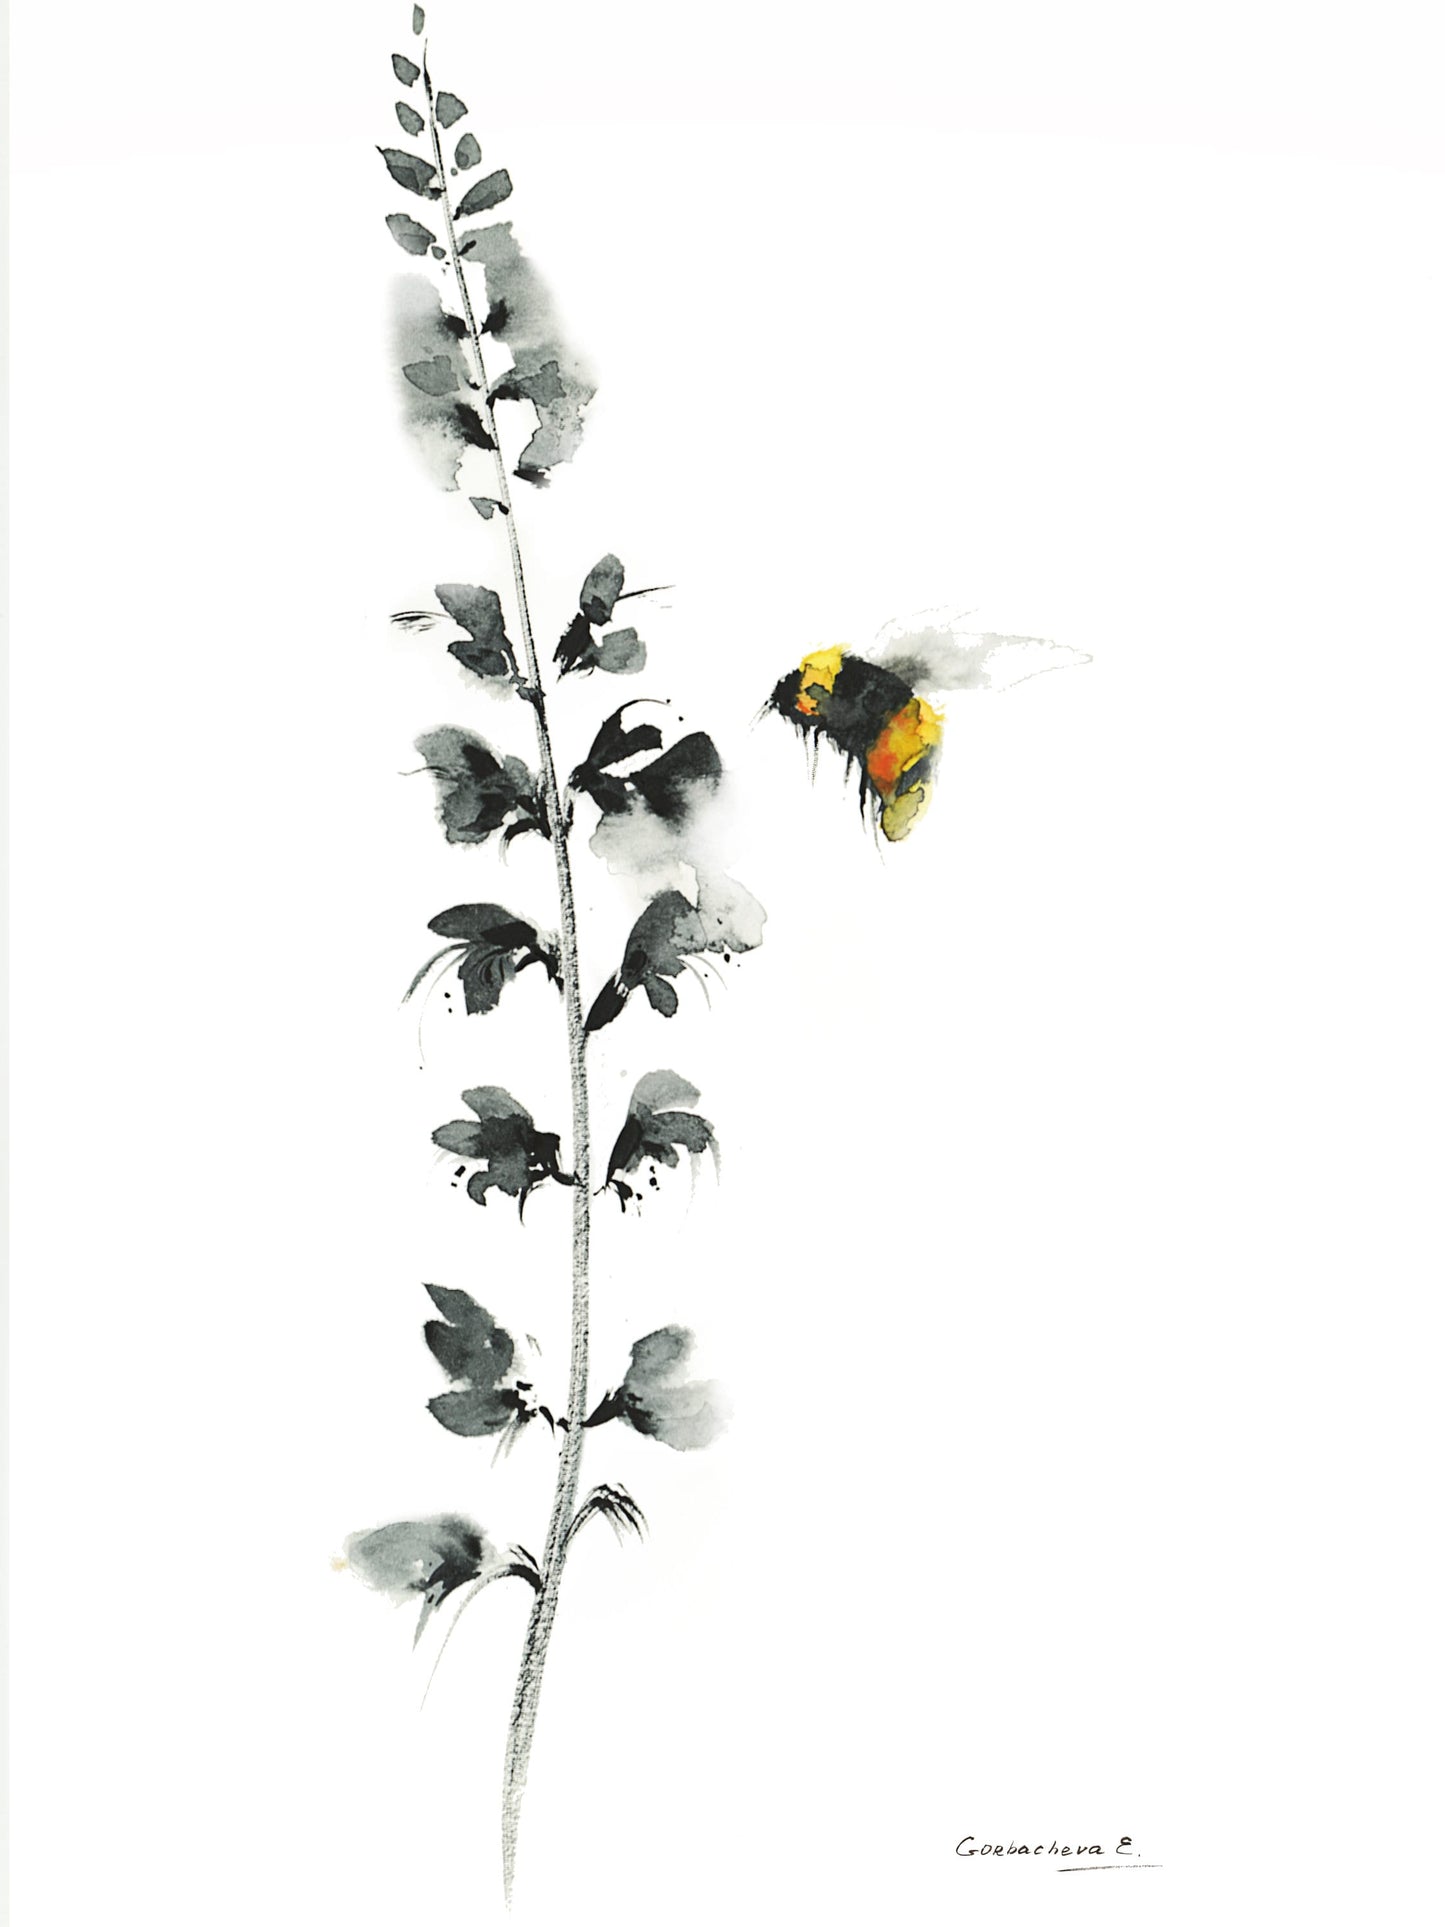 Set of 2 Bee Flower Prints, Watercolor Art, Black & Yellow Wall Decor, Minimalist Kids Room Decor, Floral Painting